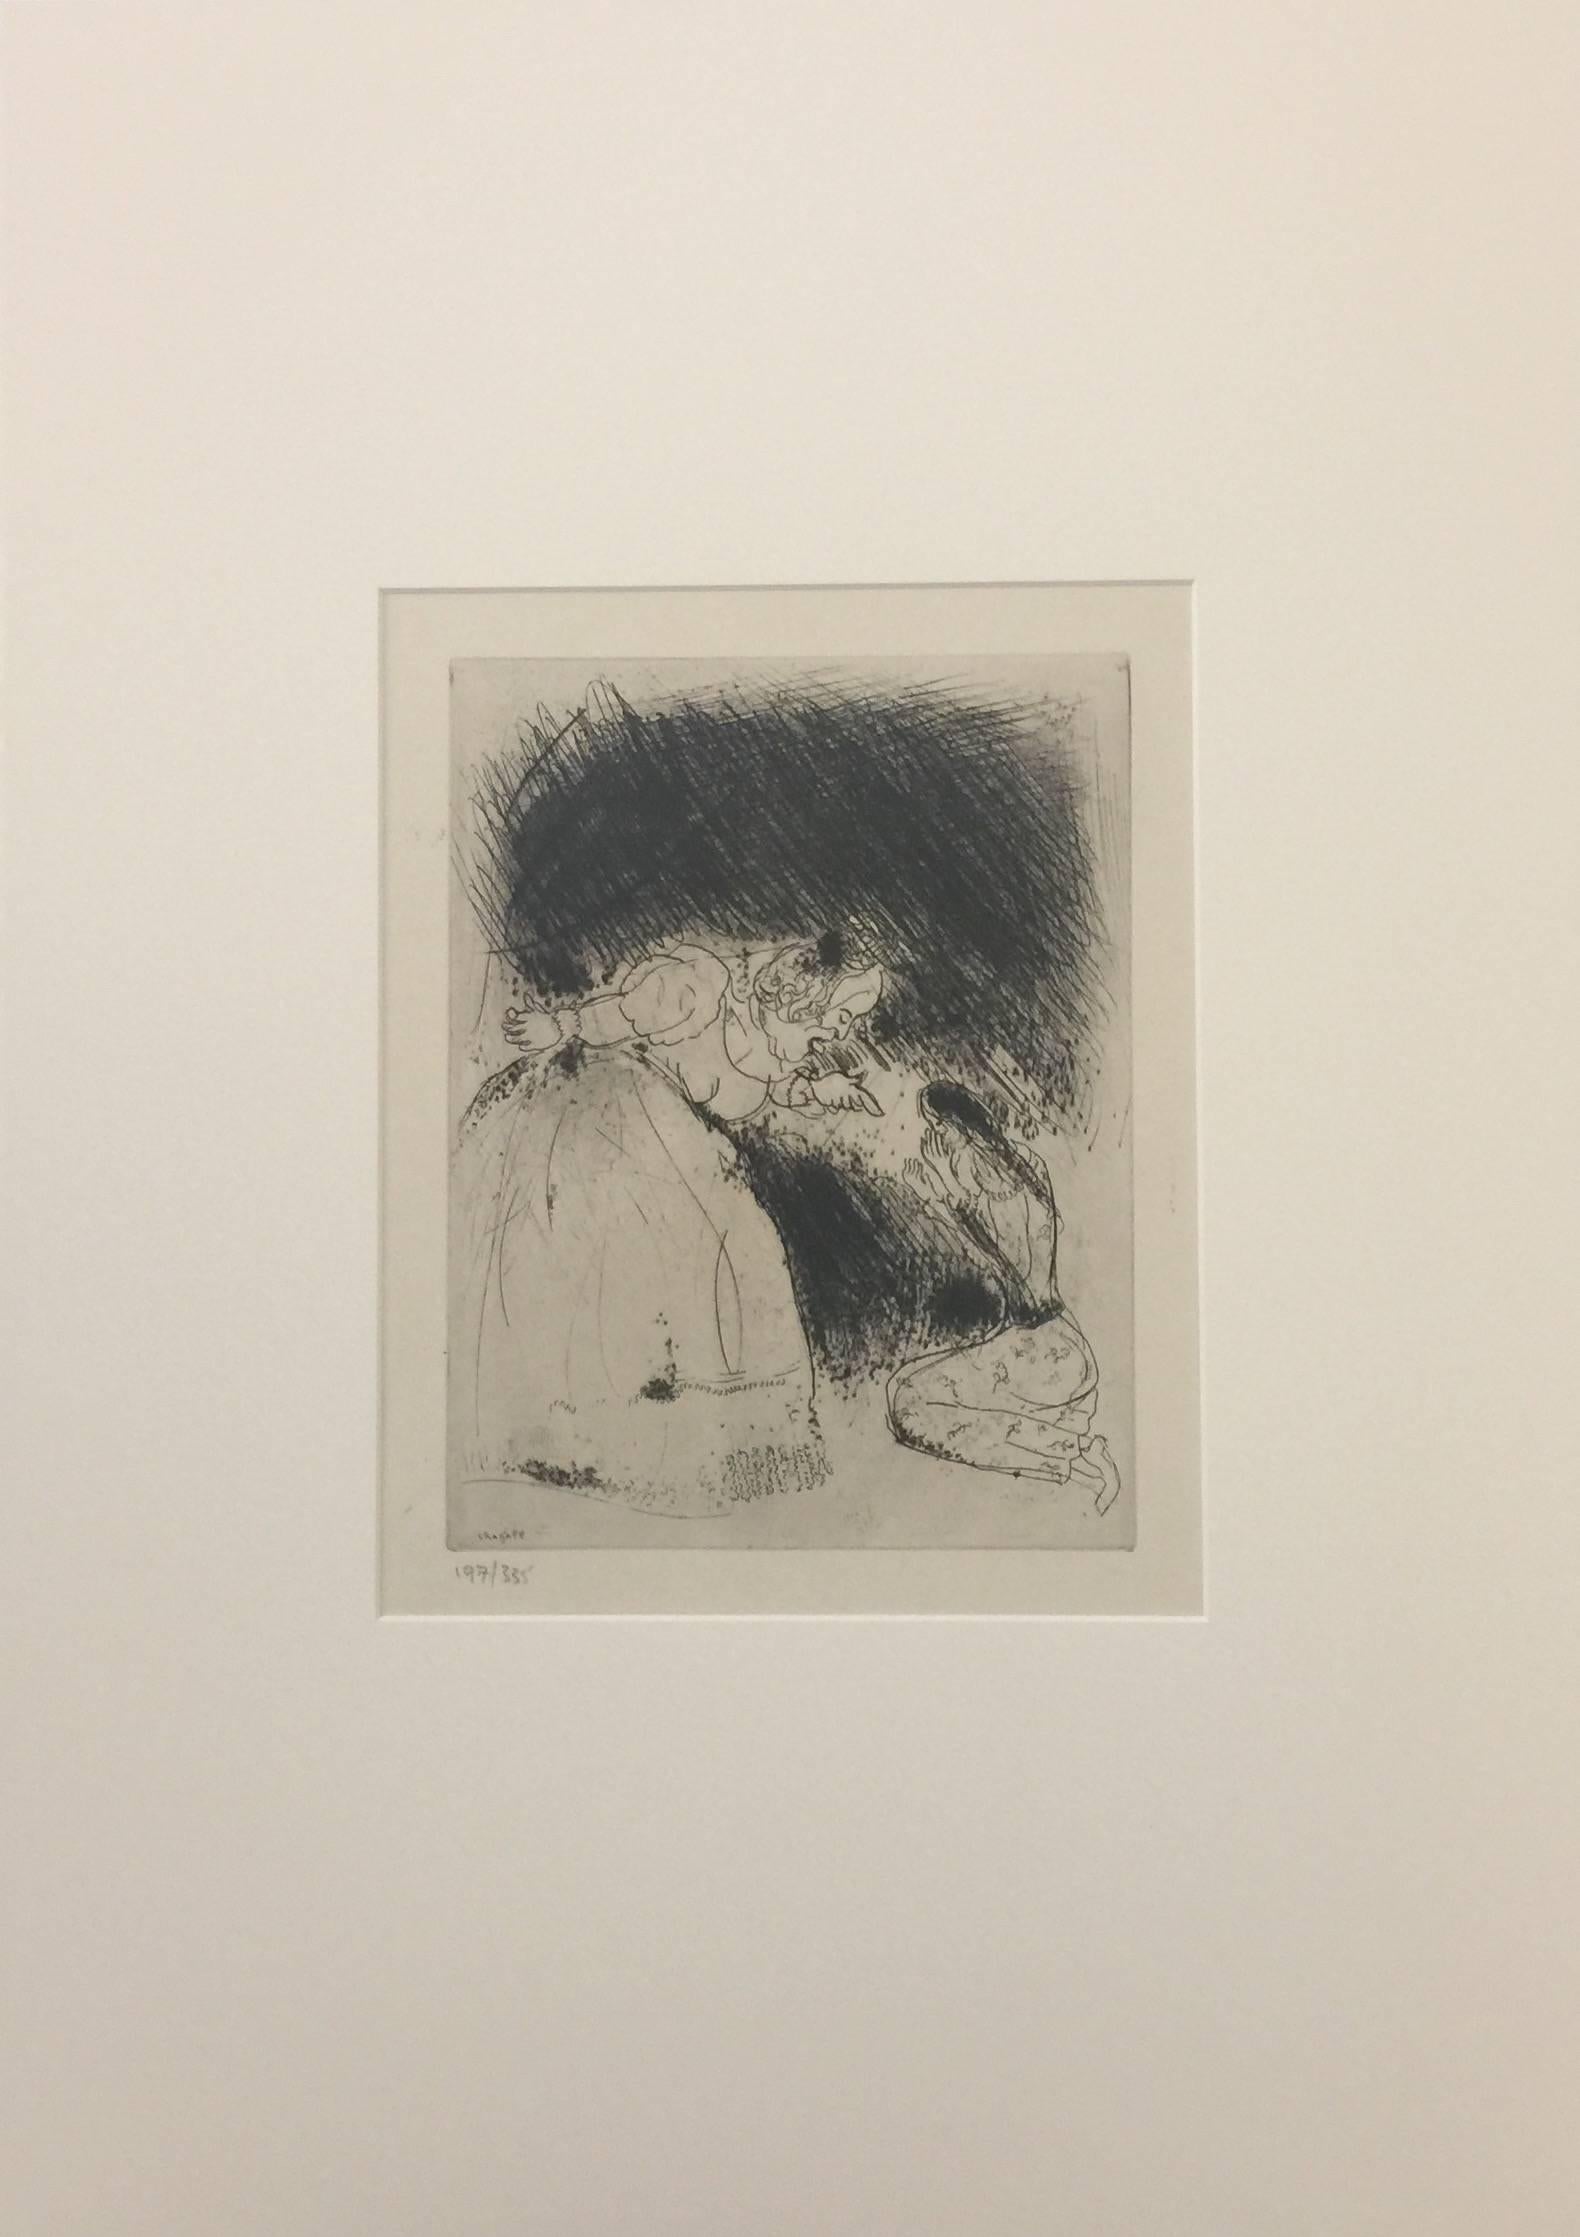 La Femme du Gouverneur Gronde sa Fille - From the series “Les Ames Mortes” - Print by Marc Chagall